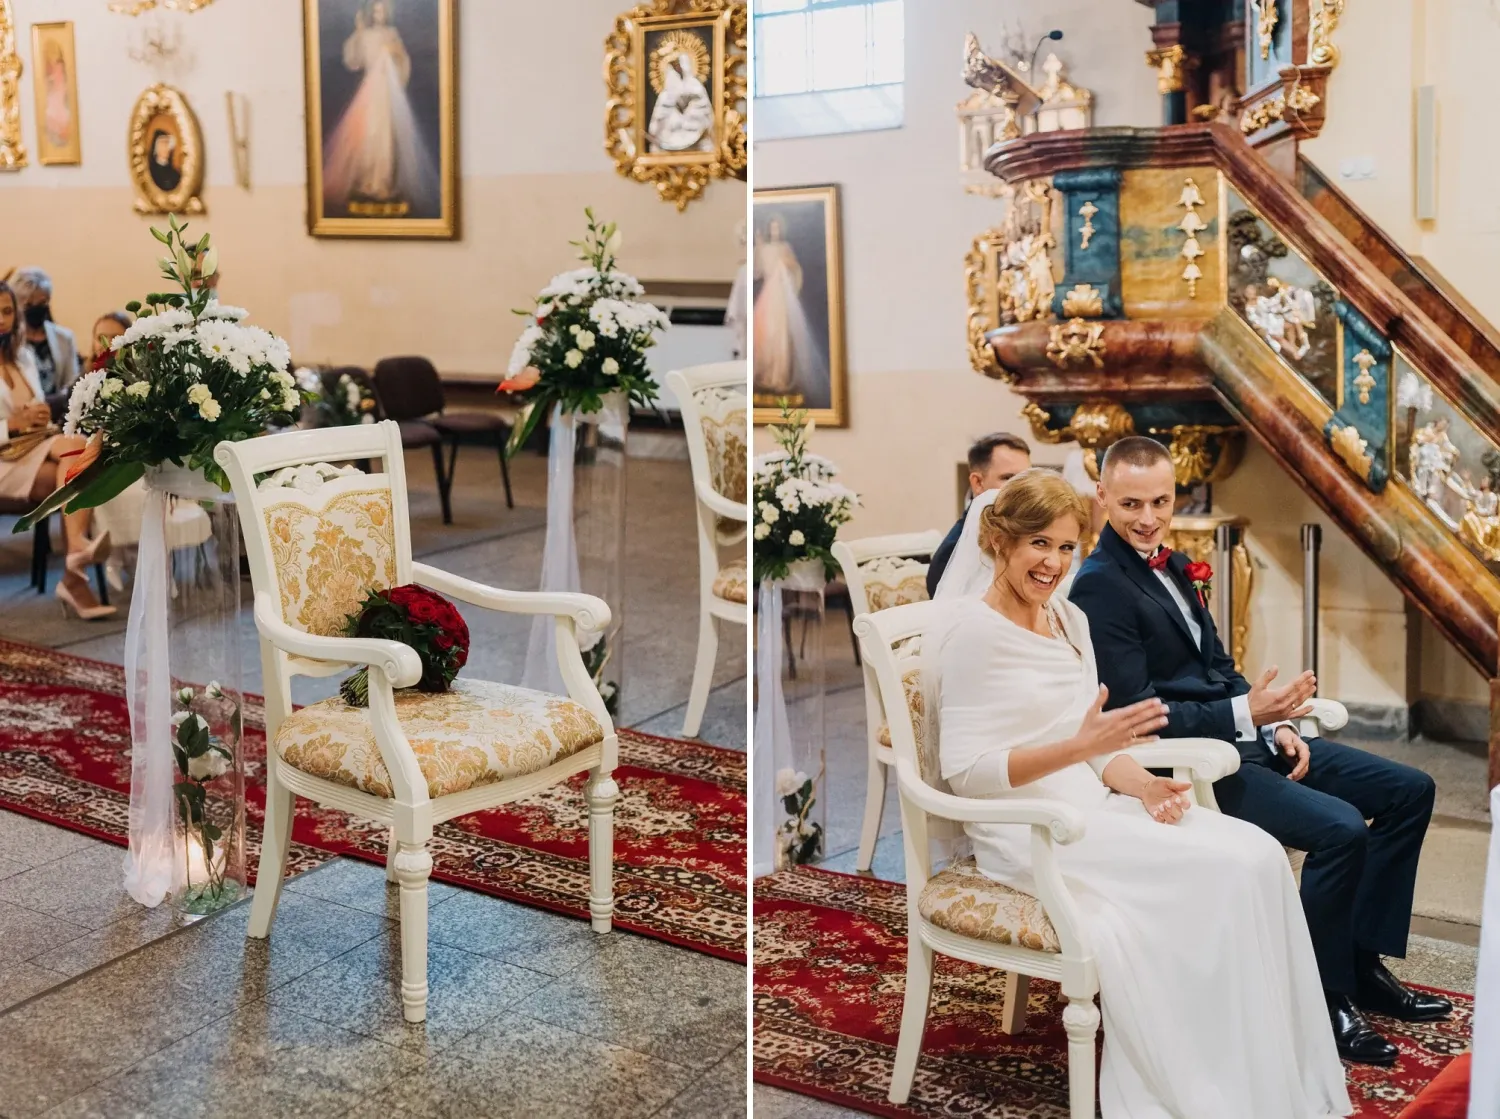 martynahubert_wedding_17.webp - Martyna & Hubert- Monika Chmielewska - wedding, portaits, family photography - Munich